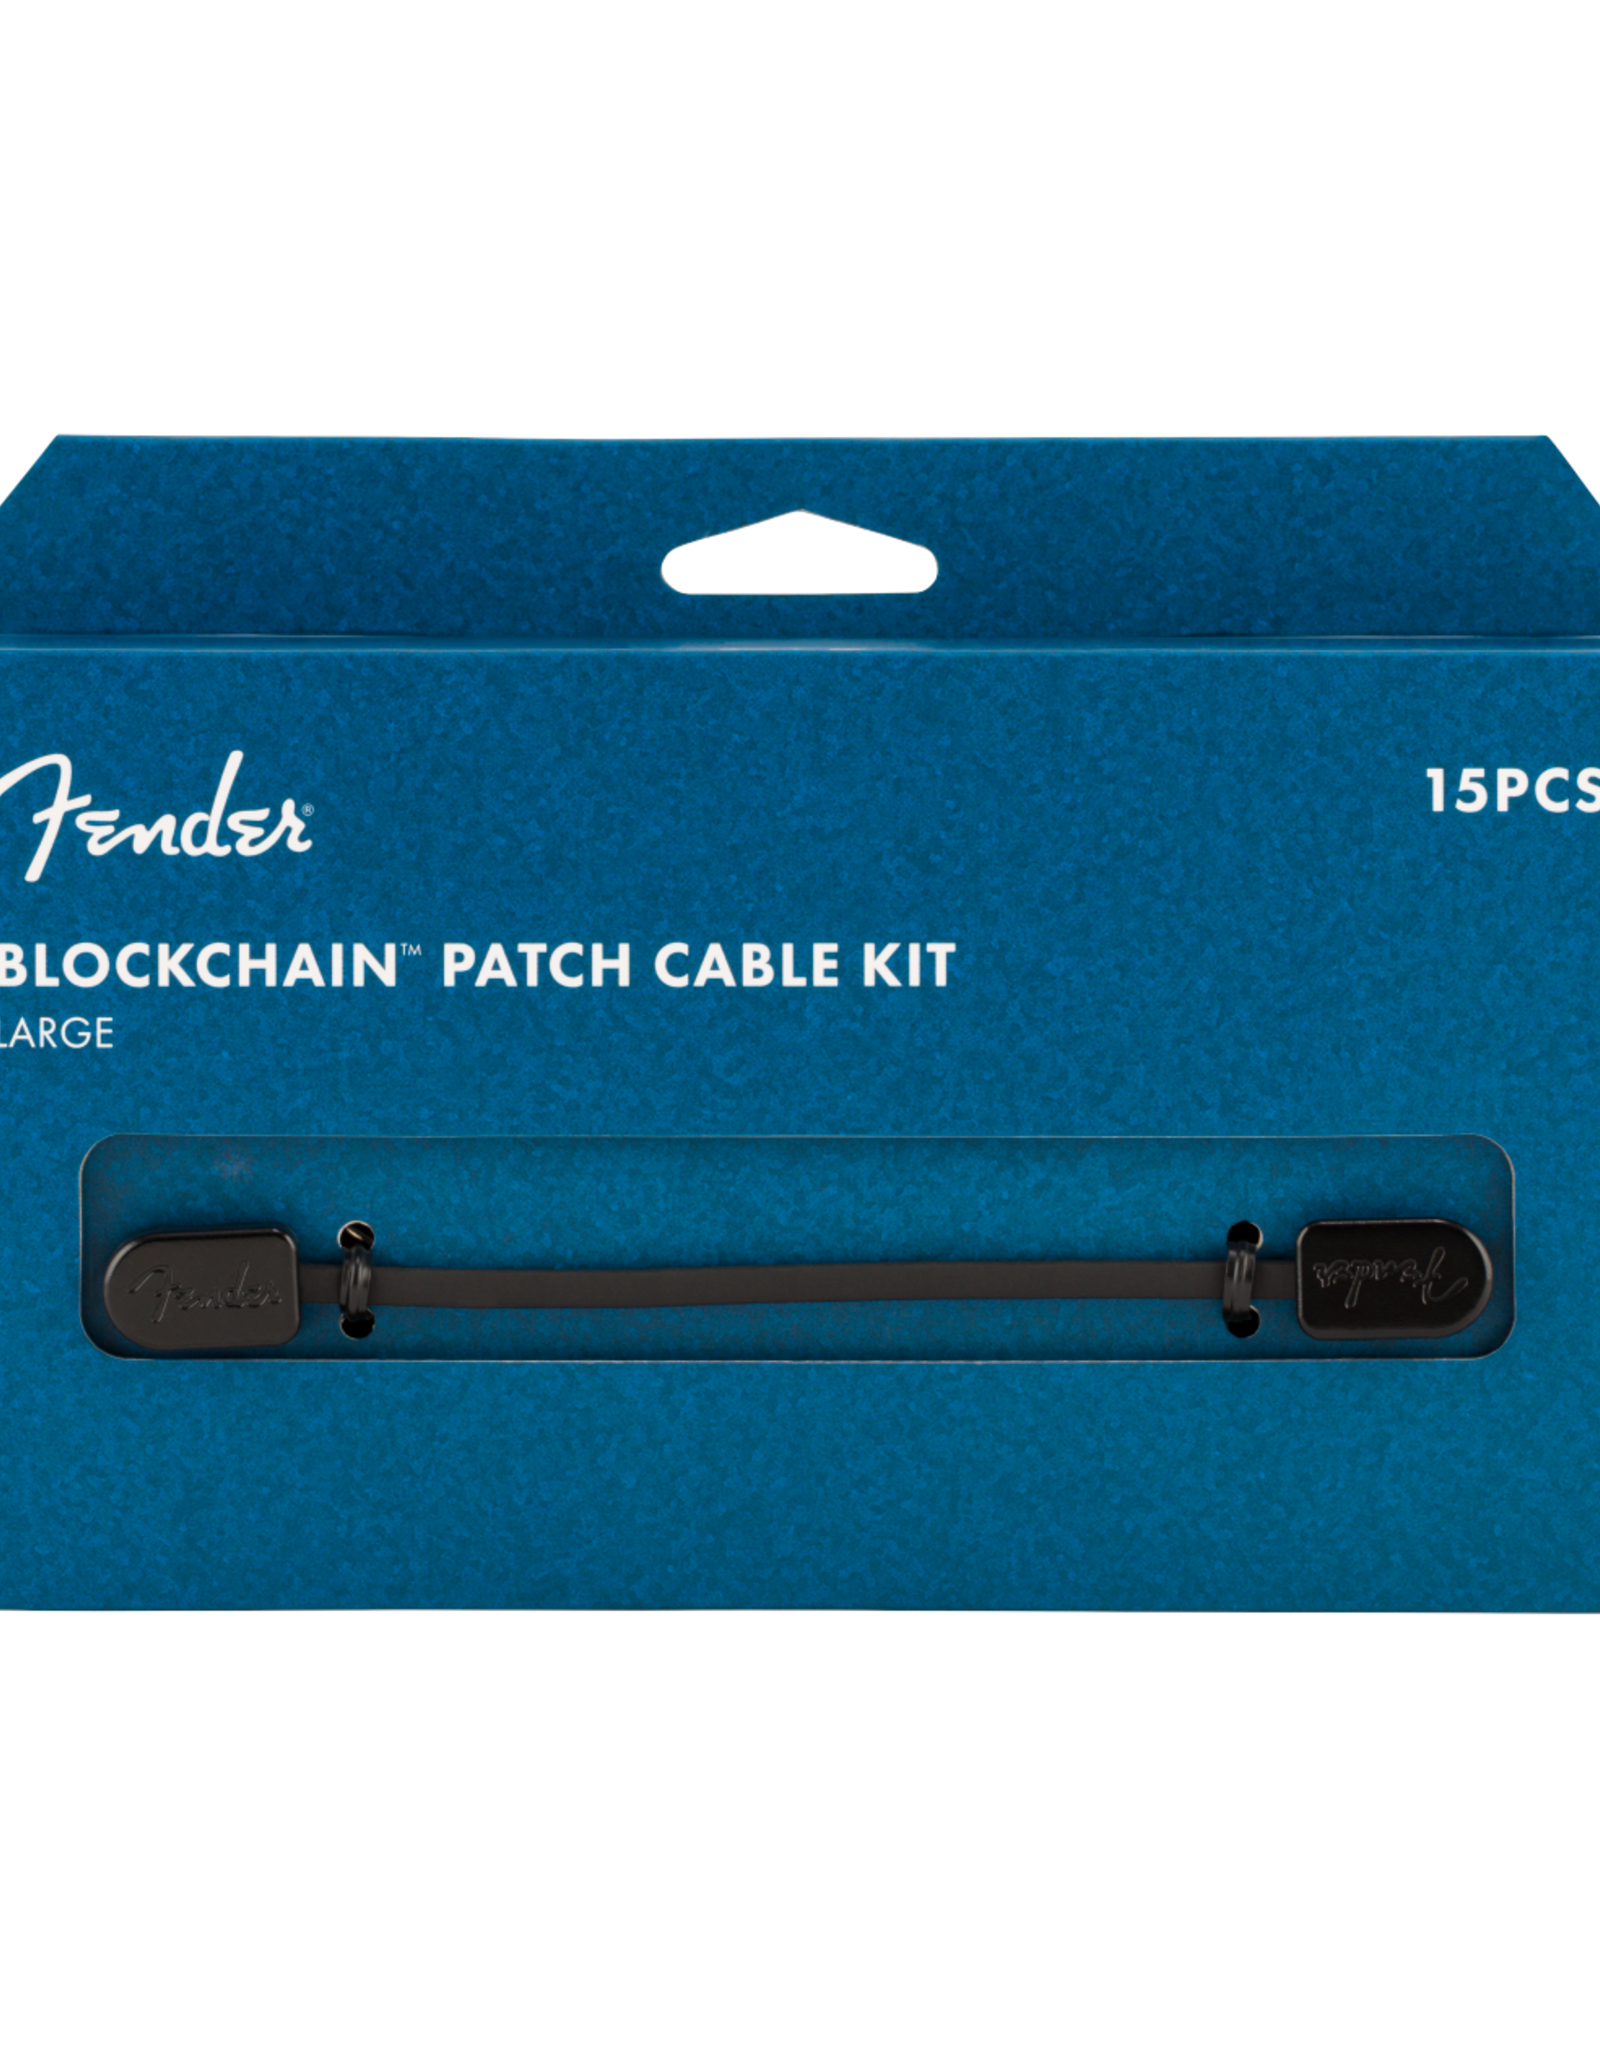 Fender Fender Blockchain Patch Cable Kit, Large